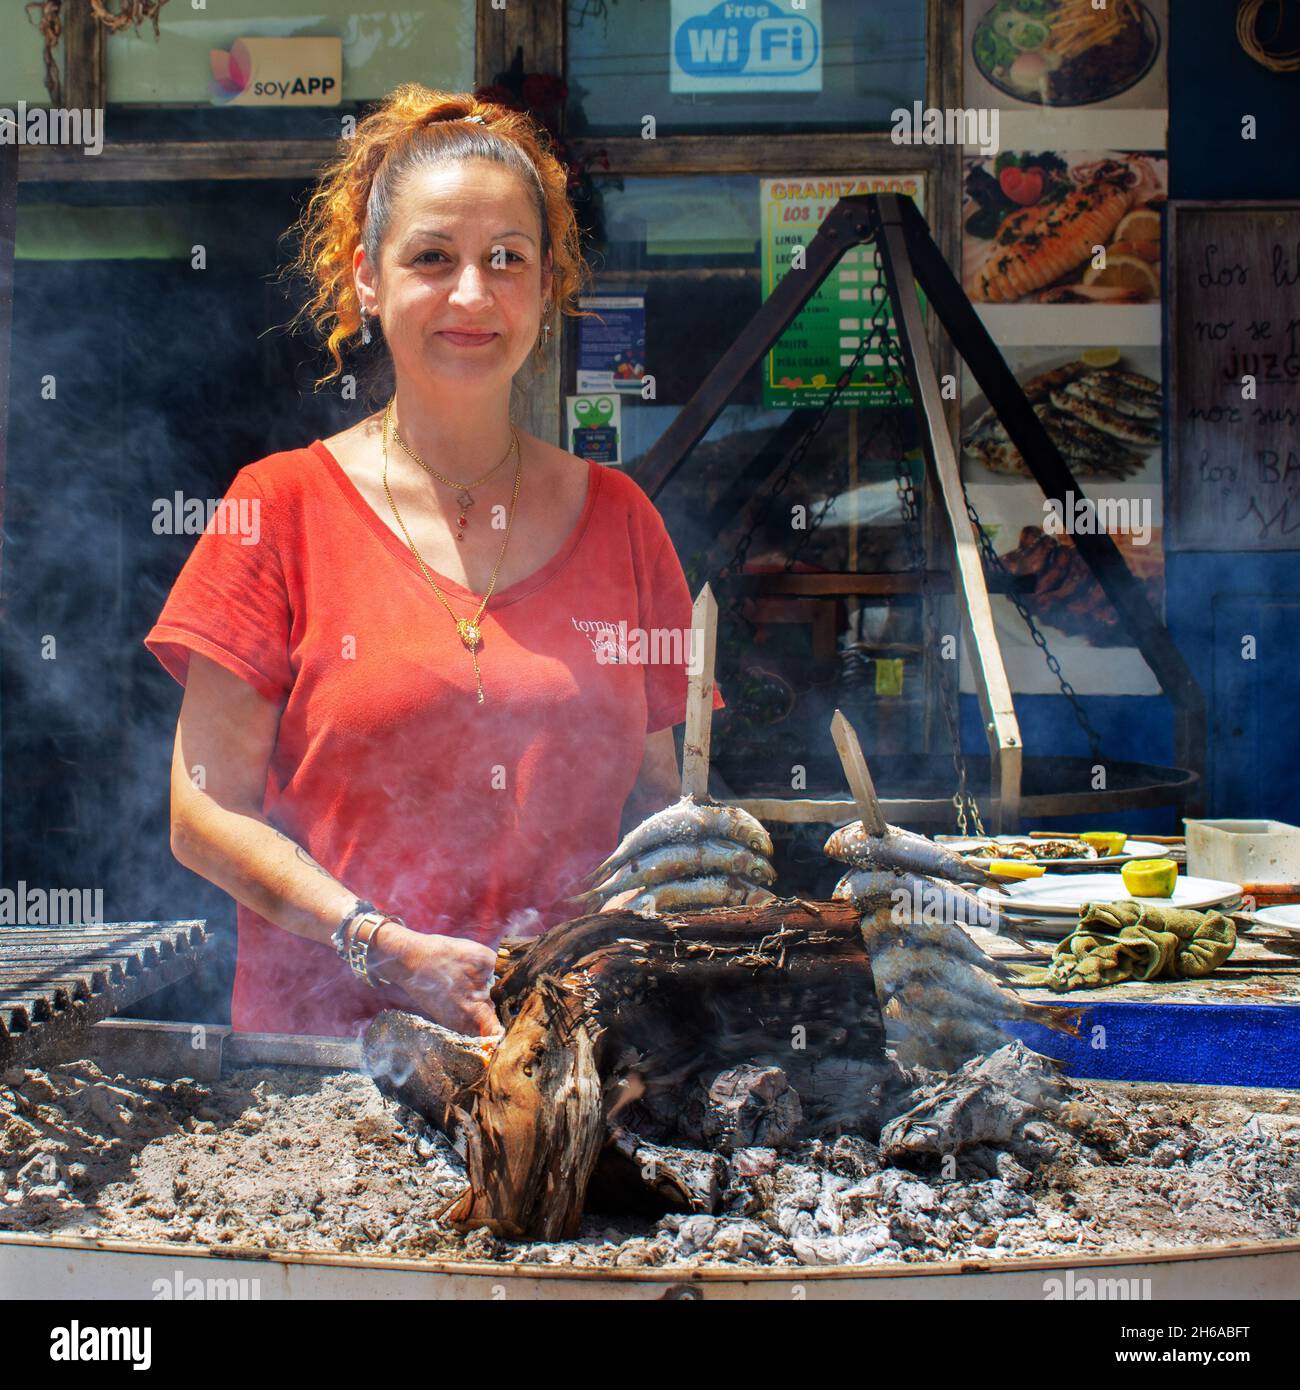 Spanish lady grilling sardines over wood fire in Mediterranean coastal bar/restaurant, Puerto de Mazarrón, Murcia, Spain. Stock Photo